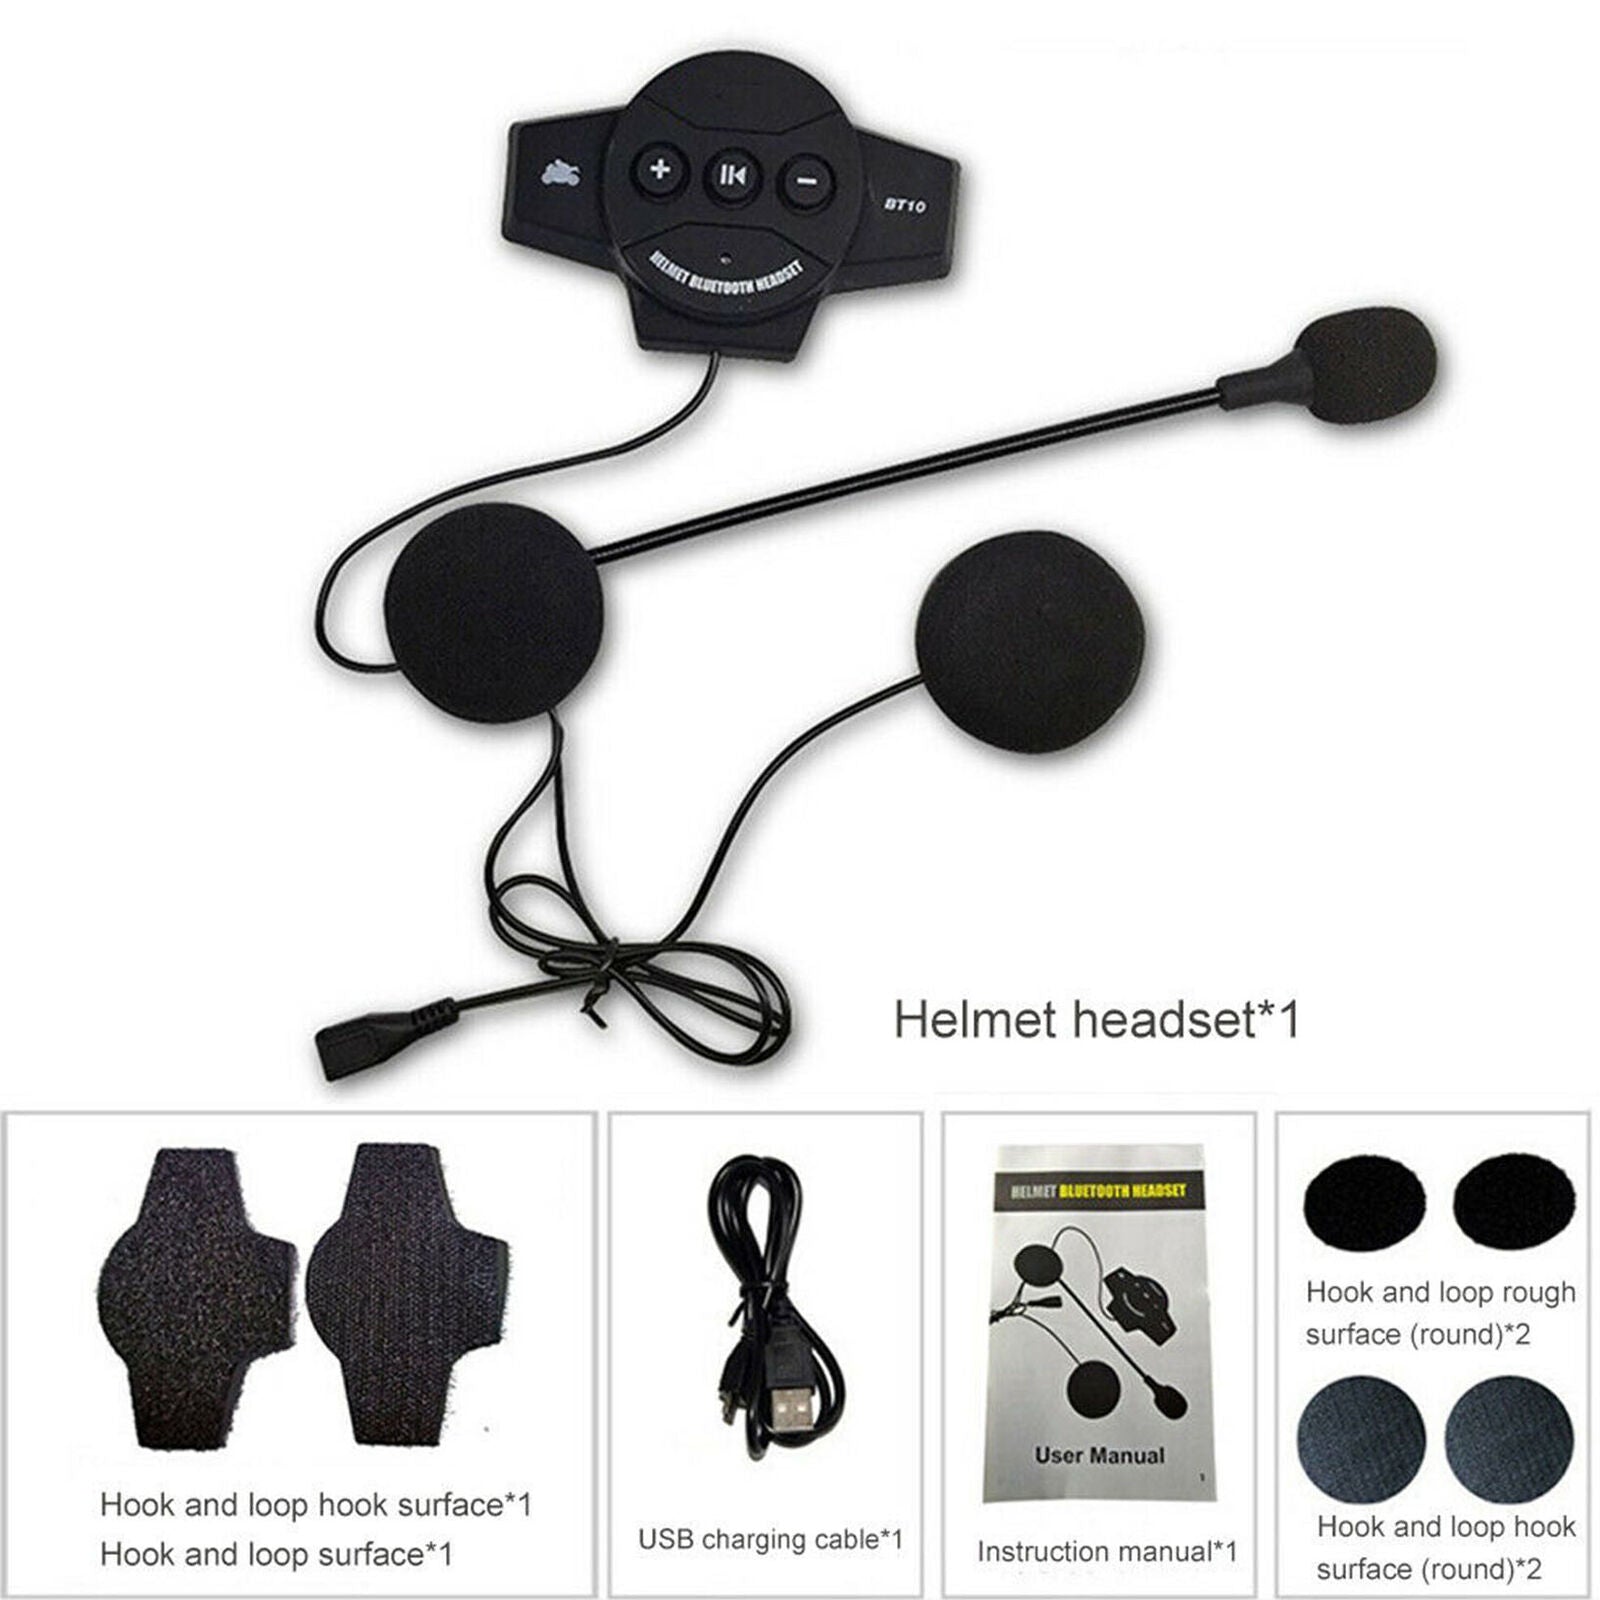 2x BT Bluetooth For Motorcycle Helmet Interphone Intercom Headset